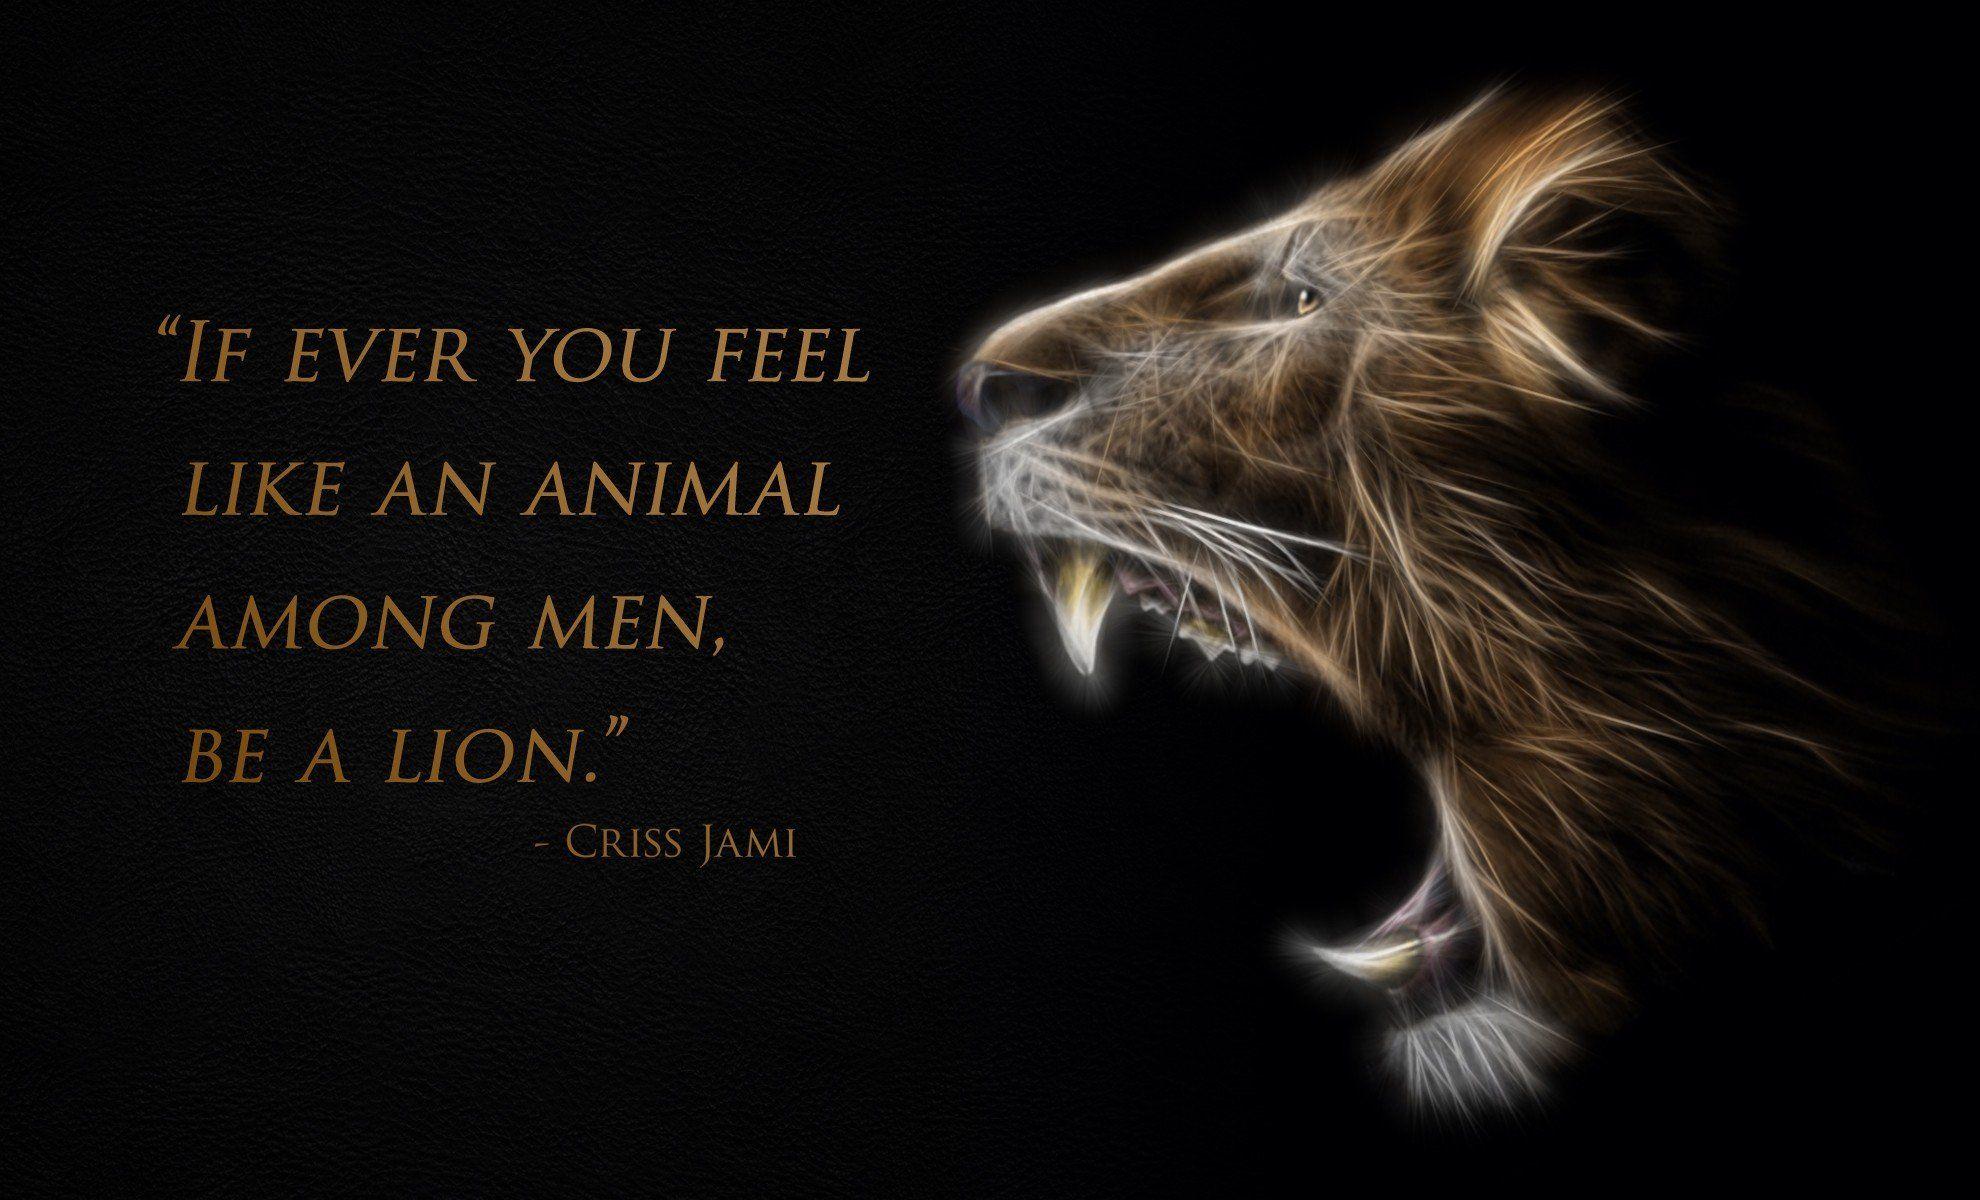 Beautiful Bob Marley Lion Wallpaper narnia quotes aslan quotesgram